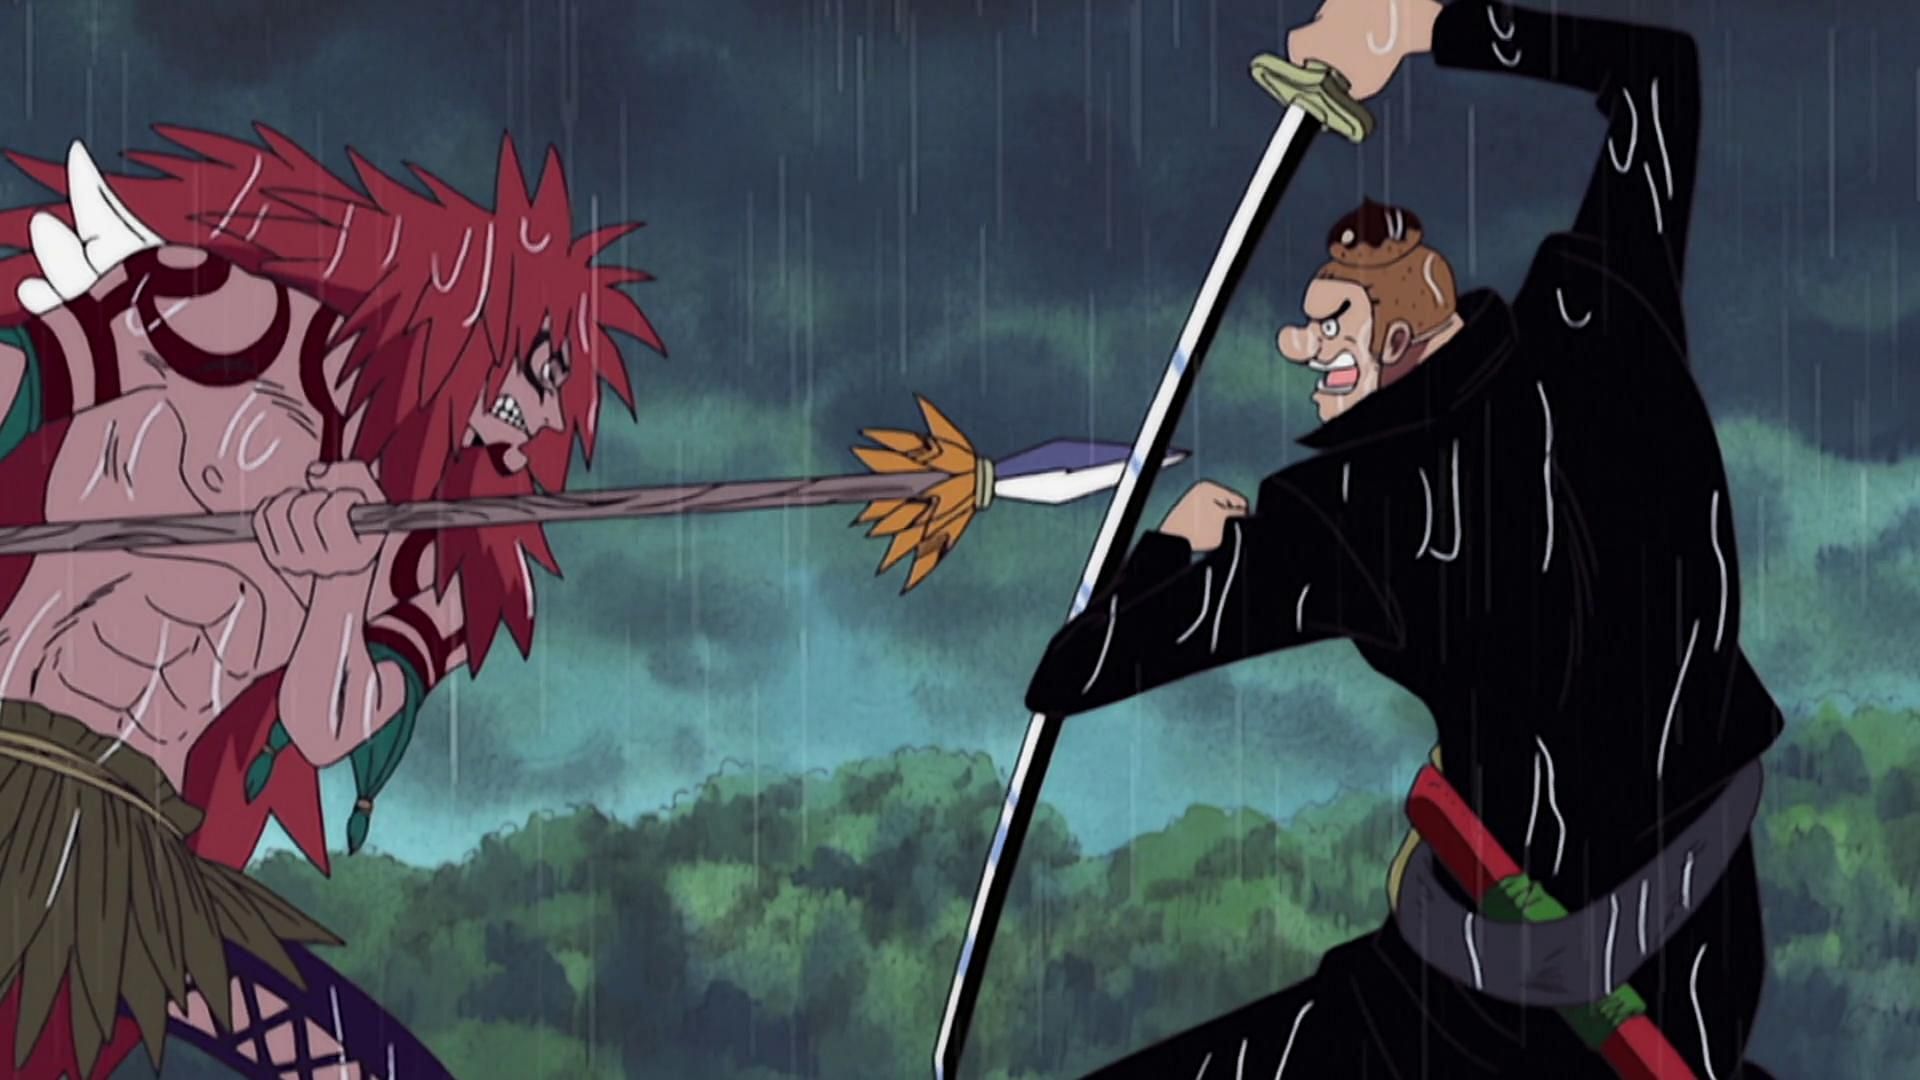 Kalgara vs Noland as seen in episode 187 of the One Piece anime (Image via Toei Animation, One Piece)